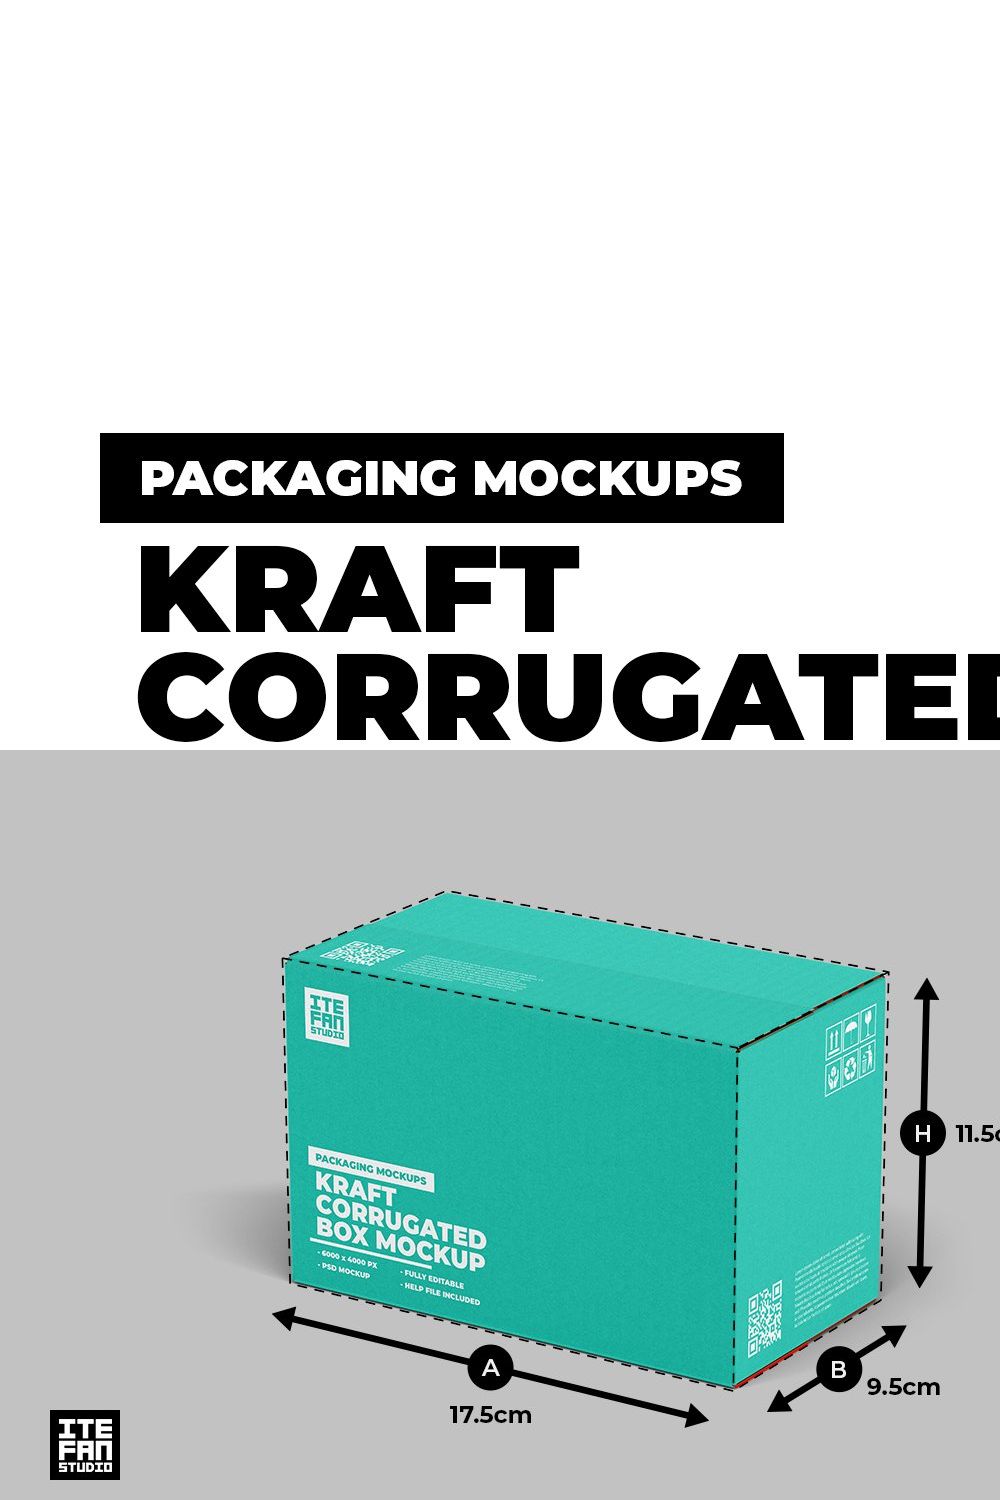 Kraft Corrugated Box Mockup pinterest preview image.